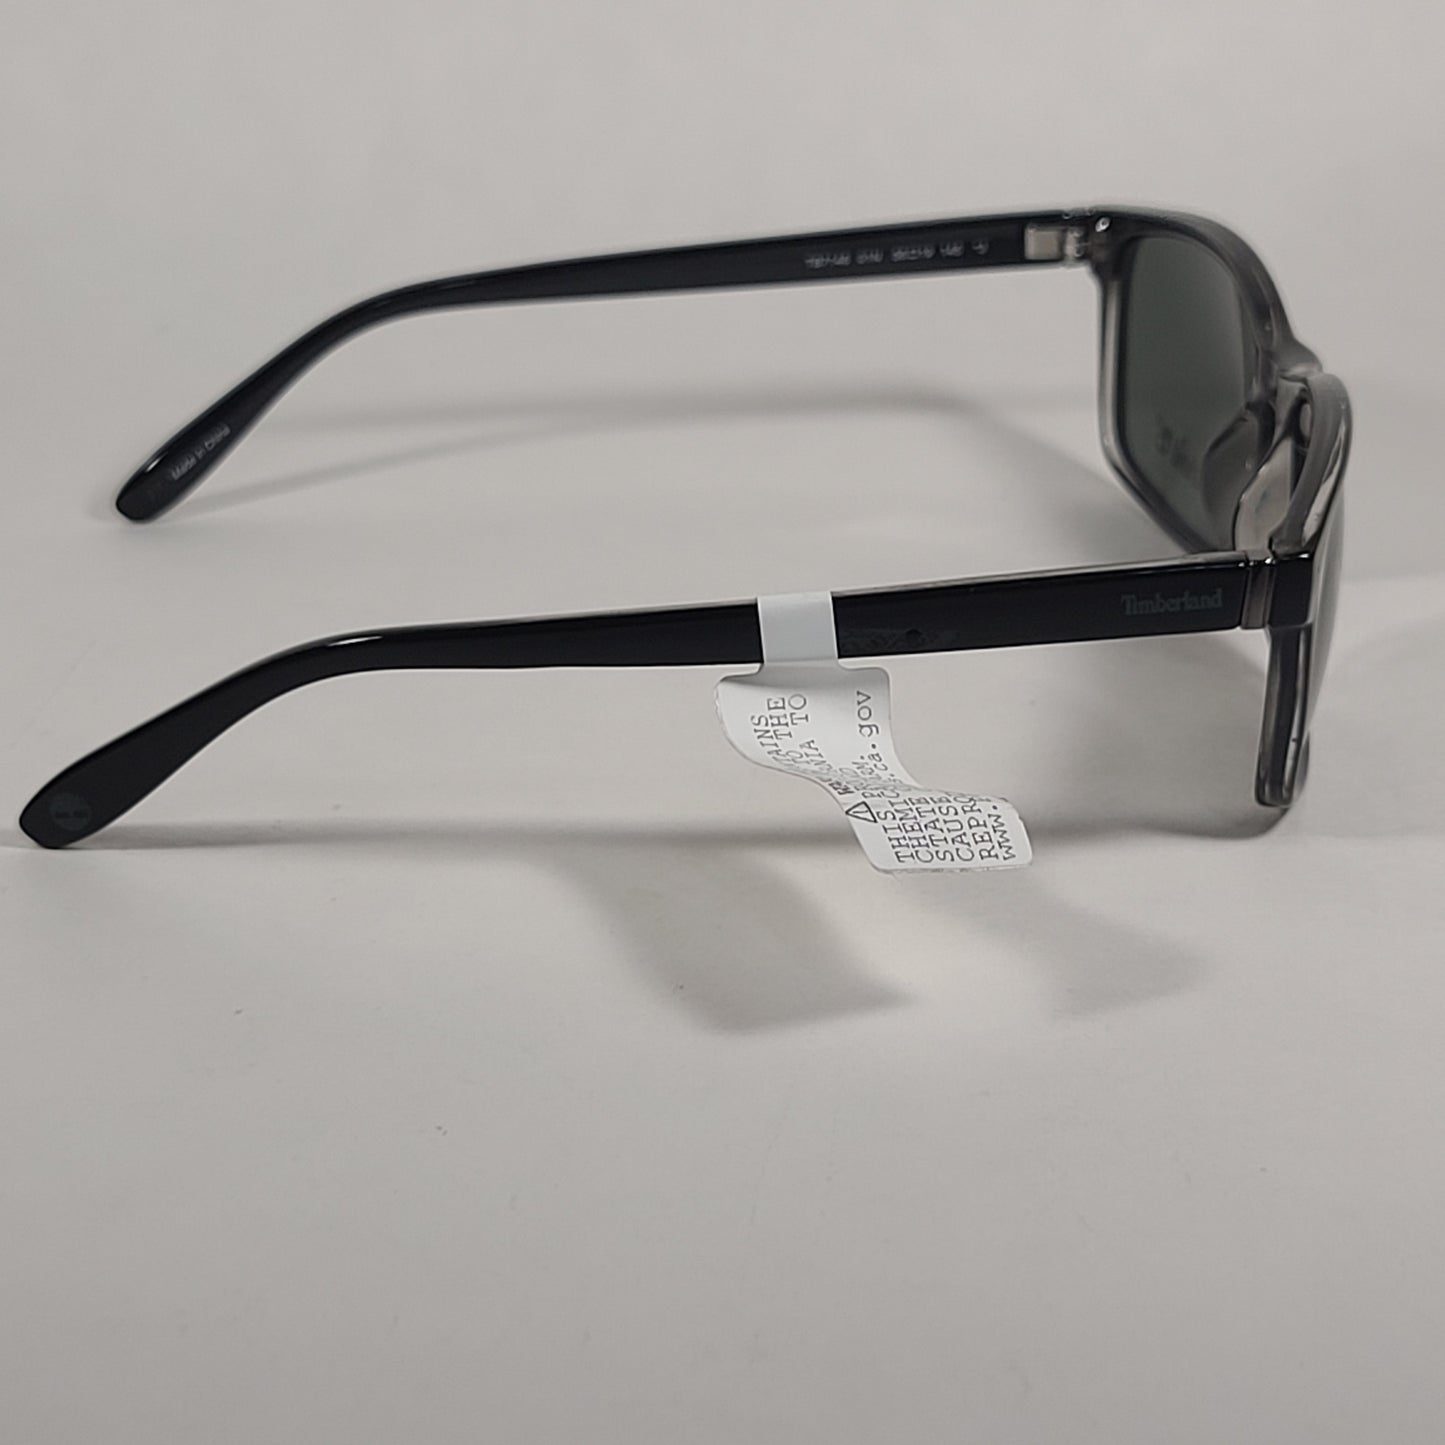 Timberland Rectangle Sunglasses Shiny Black Frame Green Lens TB7146 01N - Sunglasses